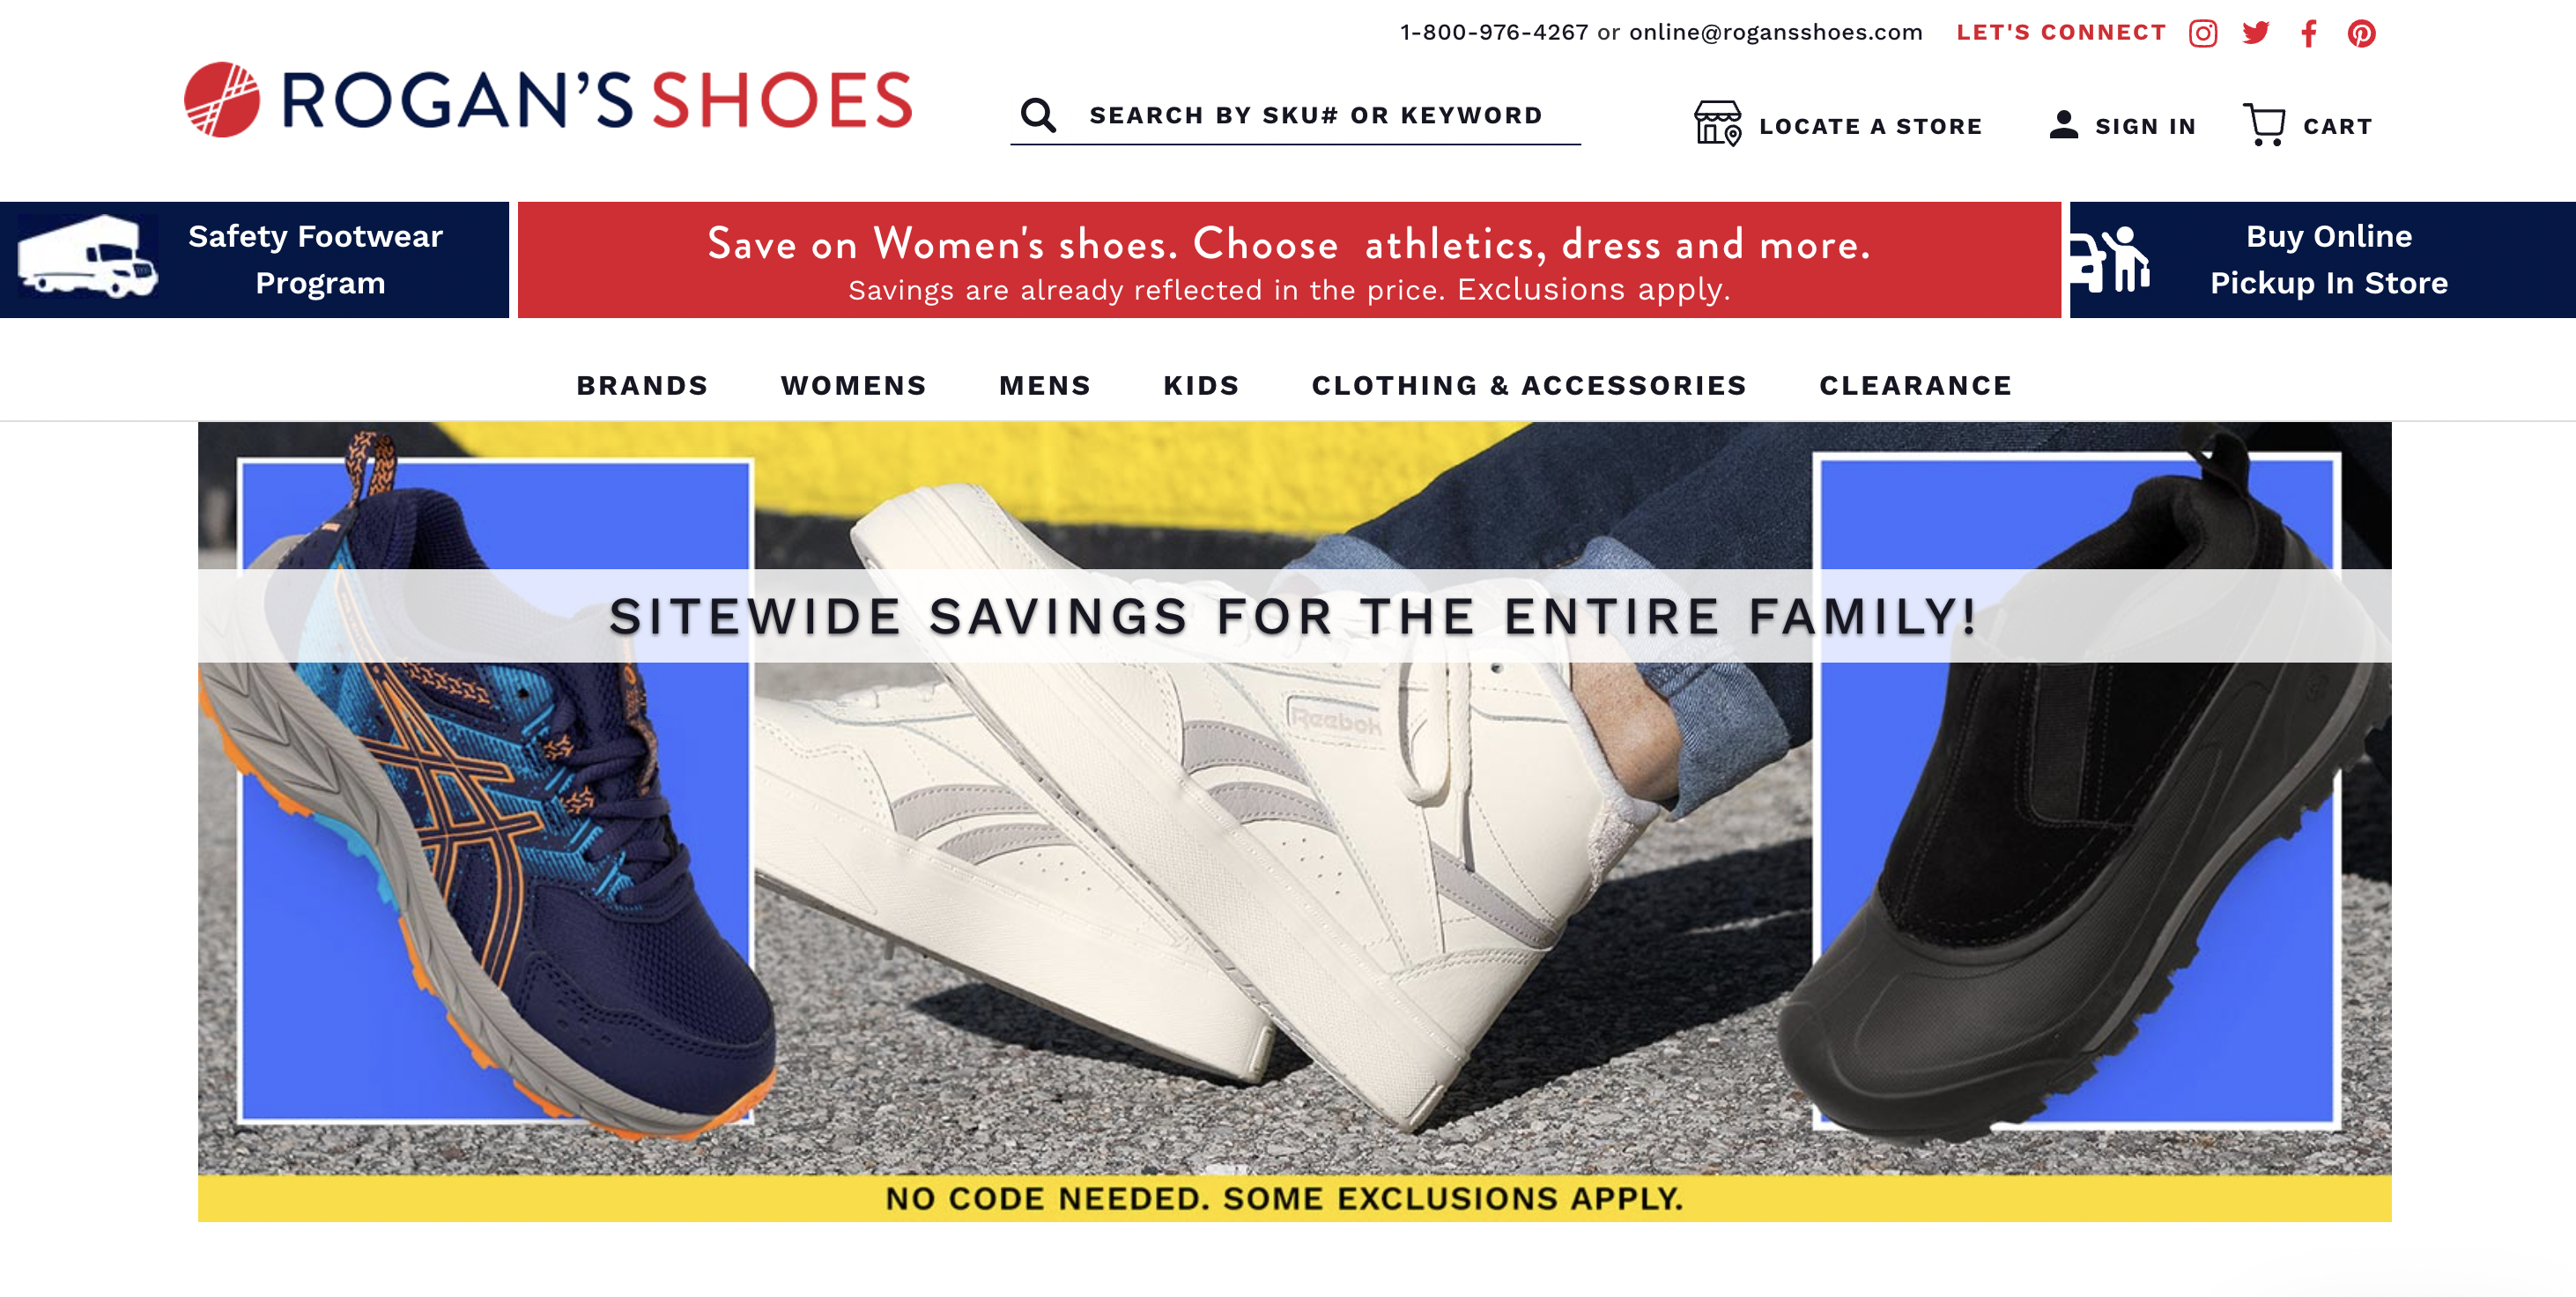 美国鞋履零售商 Shoe Carnival 以4500万美元现金收购老牌鞋履零售商 Rogan Shoes